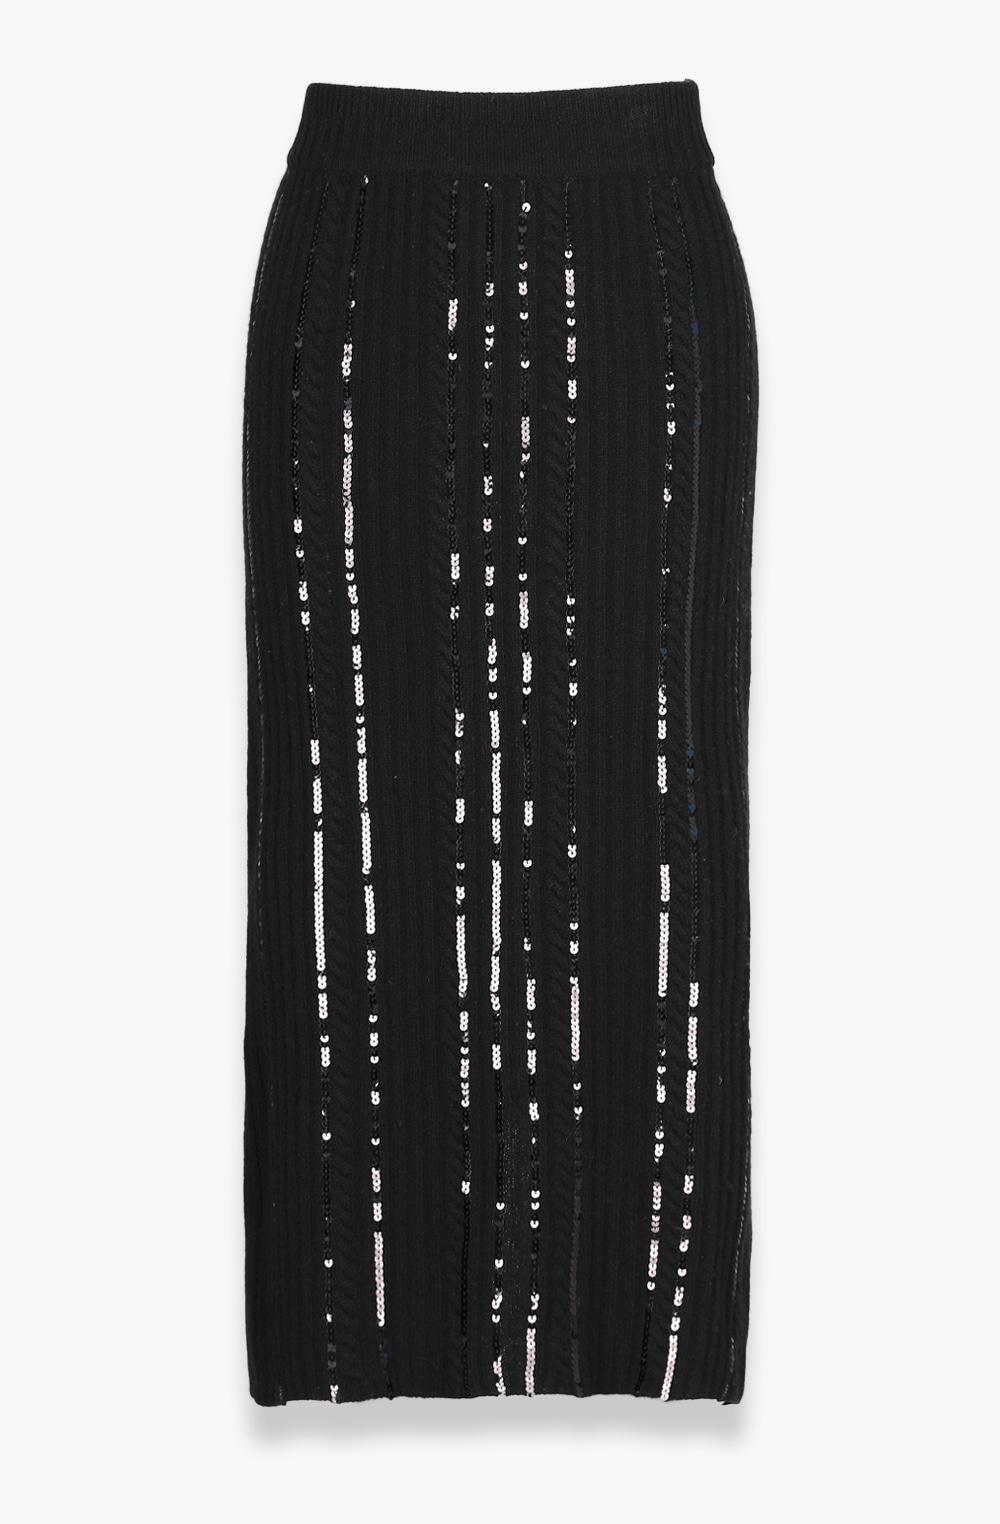 HIGH QUALITY LINE - Wool Cash Sequin Embellished Knit Skirt (BLACK) 2차 예약 오더